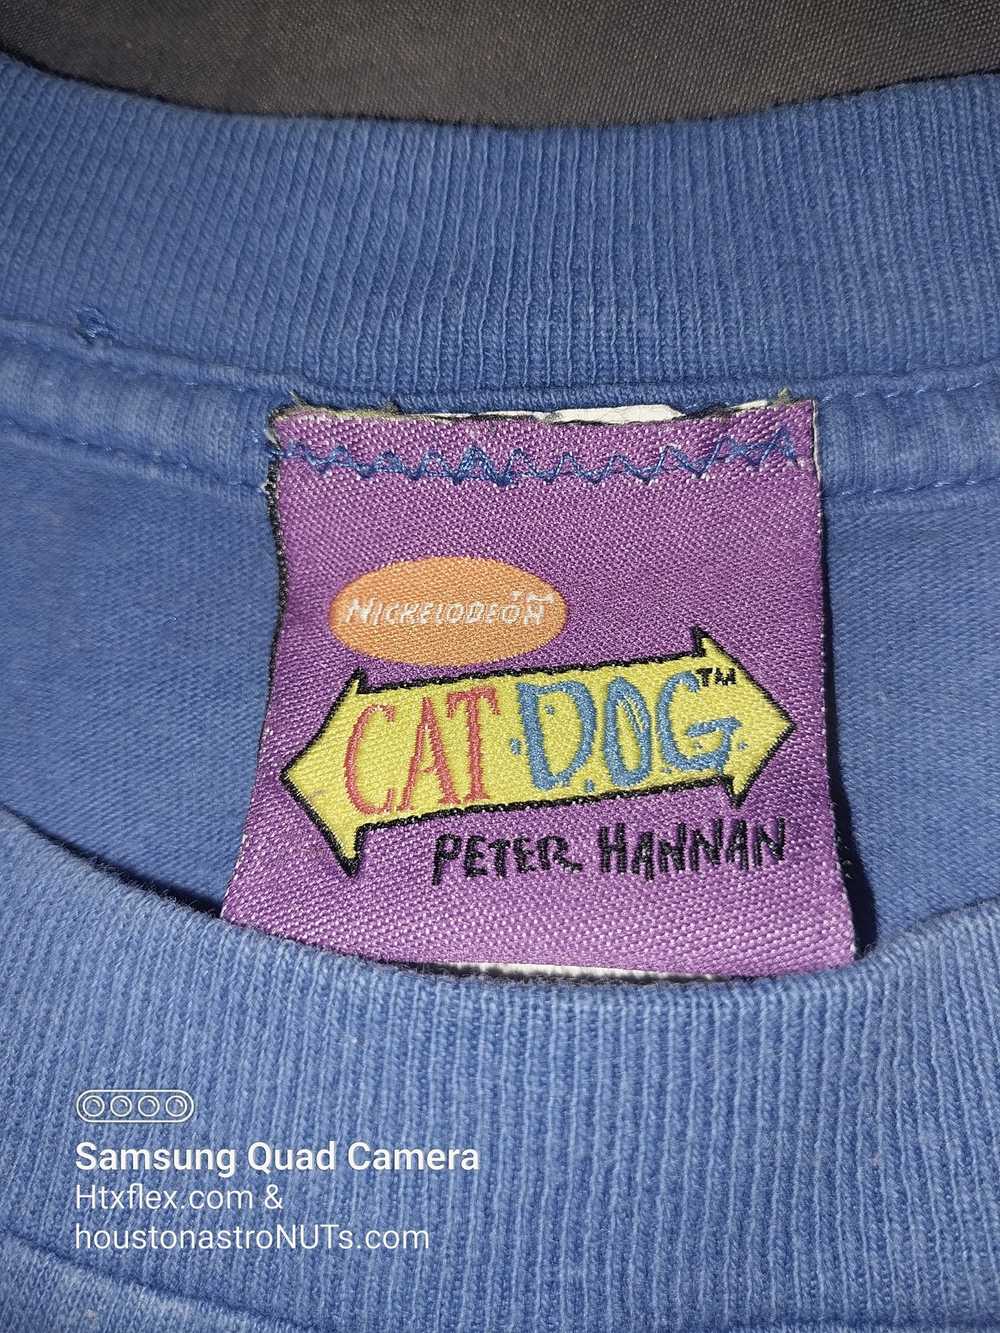 Nickelodeon Vintage nIckelodeon catdog tshirt - image 3